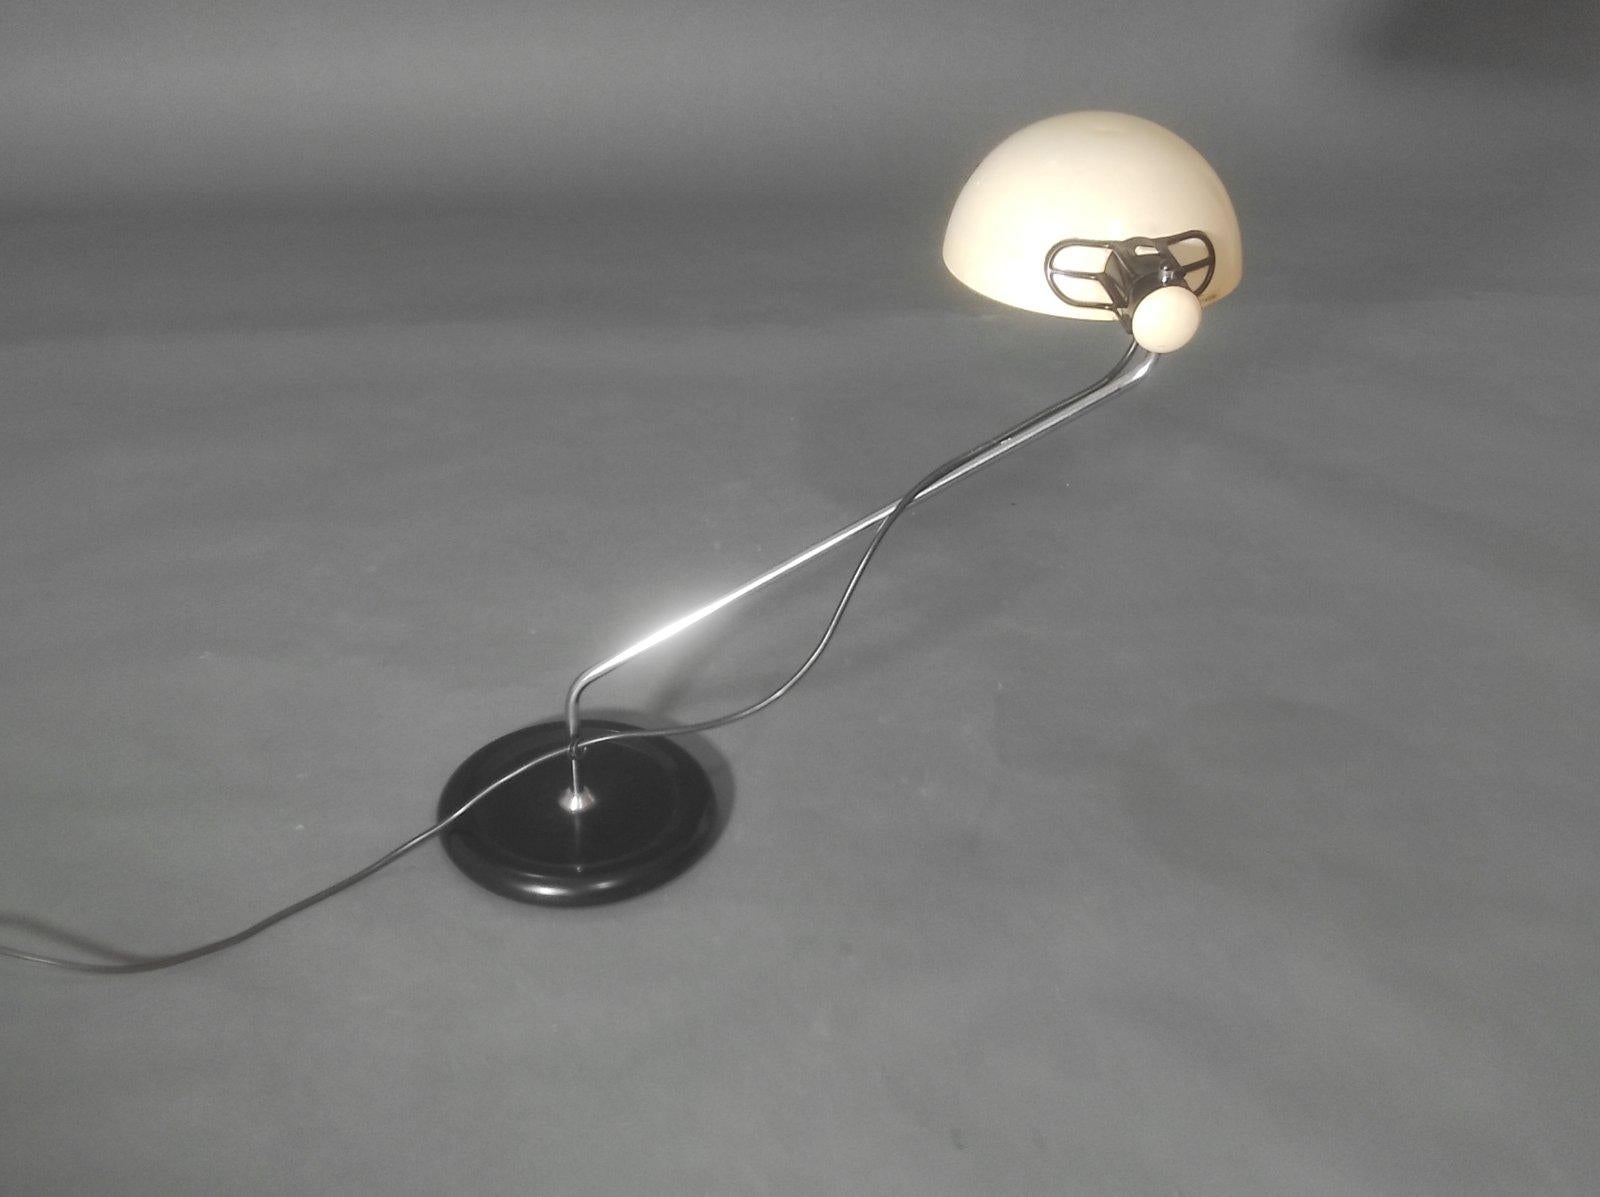 Chrome Guzzini Meblo Table Lamp By Emilio Fabio Simon Italy 1970s. For Sale